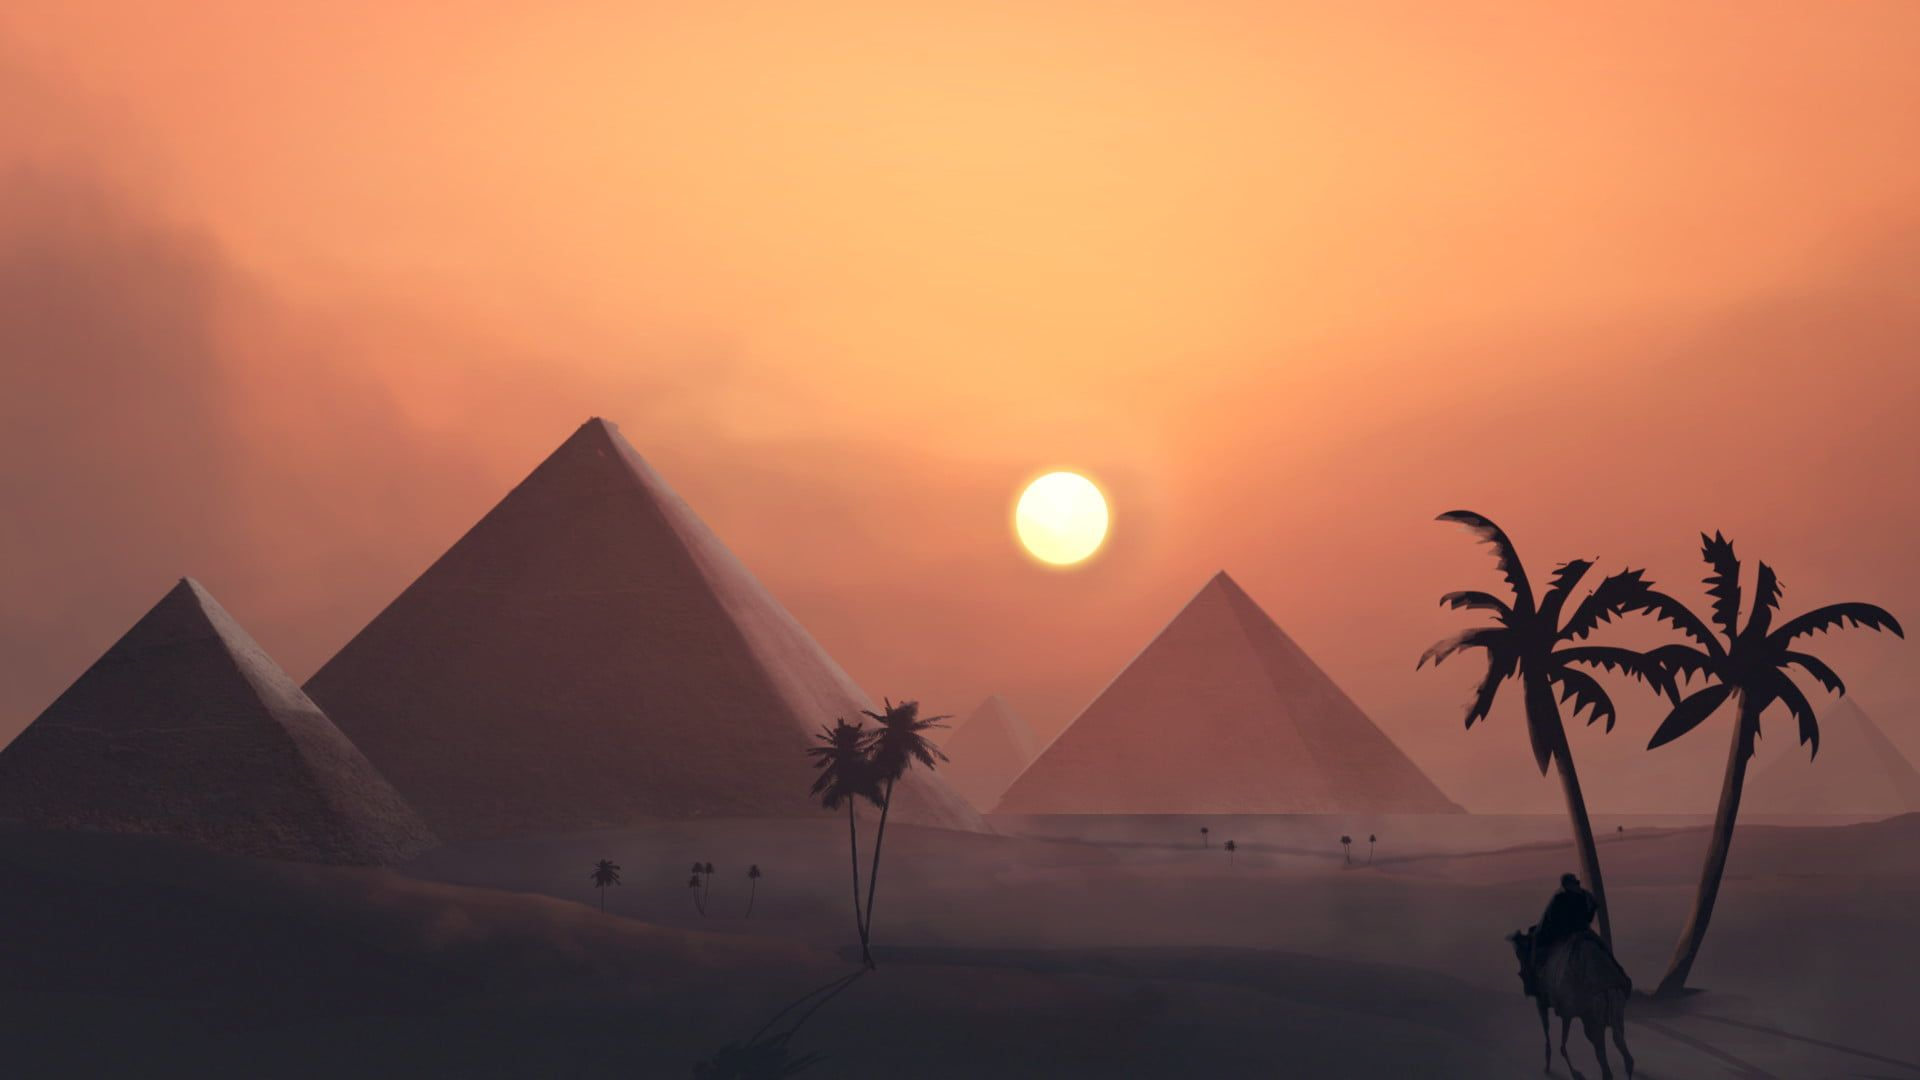 1920x1080 pyramids illustration #landscape #illustration #pyramid digital art #Egypt #desert Adrian Dudak #1080P #wallpaper #hdwallpaper #deskto&acirc;&#128;&brvbar; | Pyramids, Landscape, Egypt